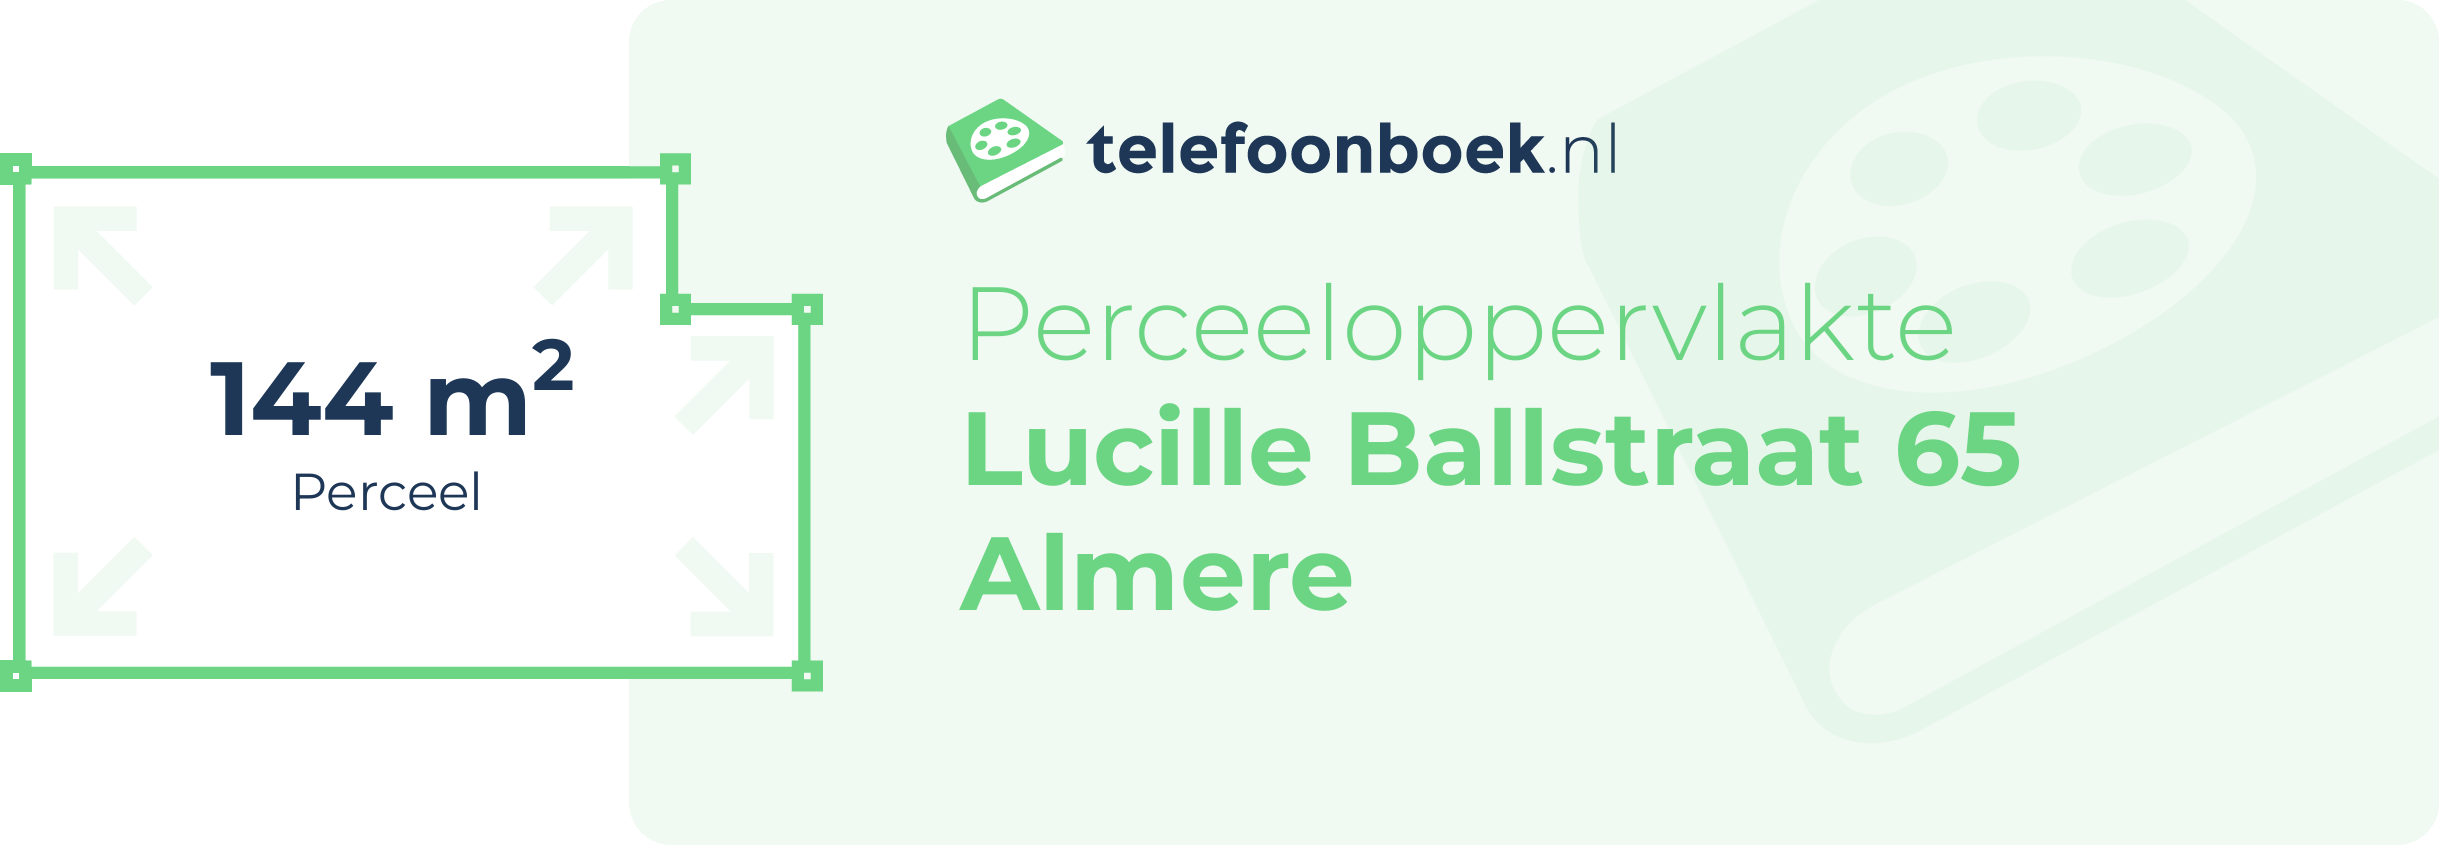 Perceeloppervlakte Lucille Ballstraat 65 Almere